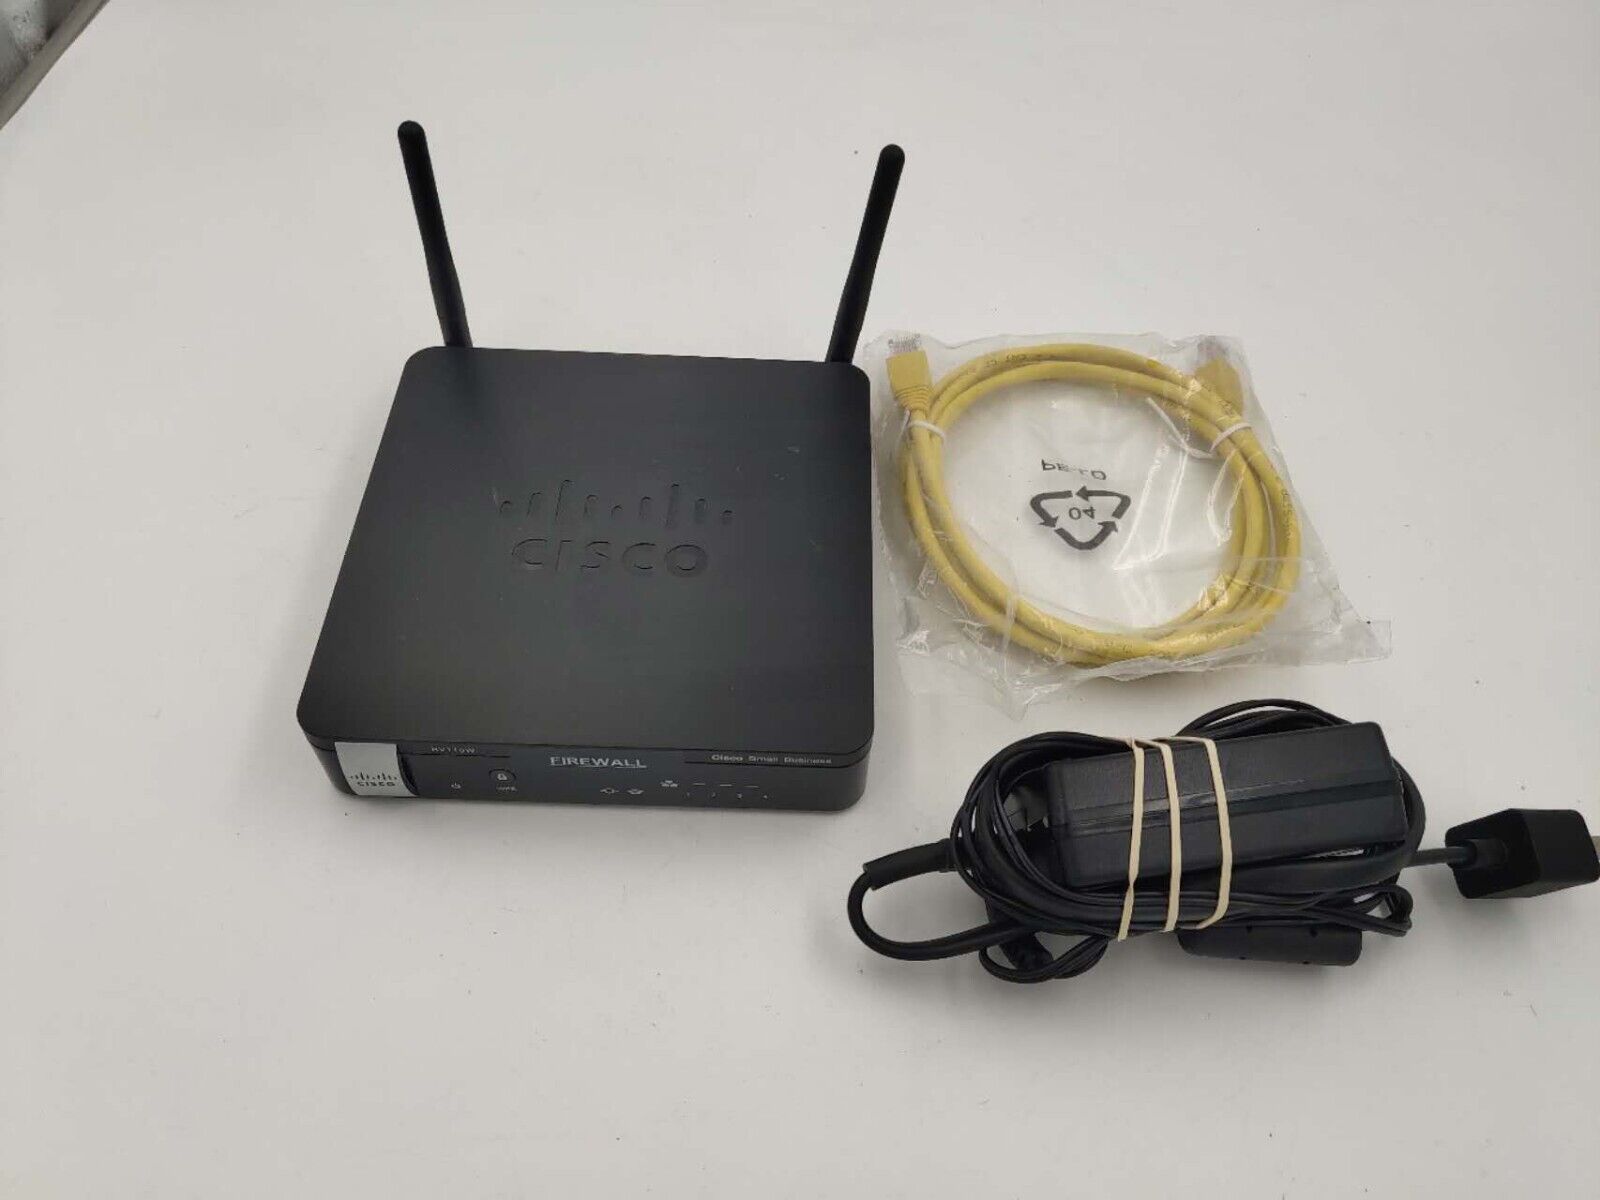 Cisco RV110W Small Office Wireless-N VPN Firewall Router w/ Adapter